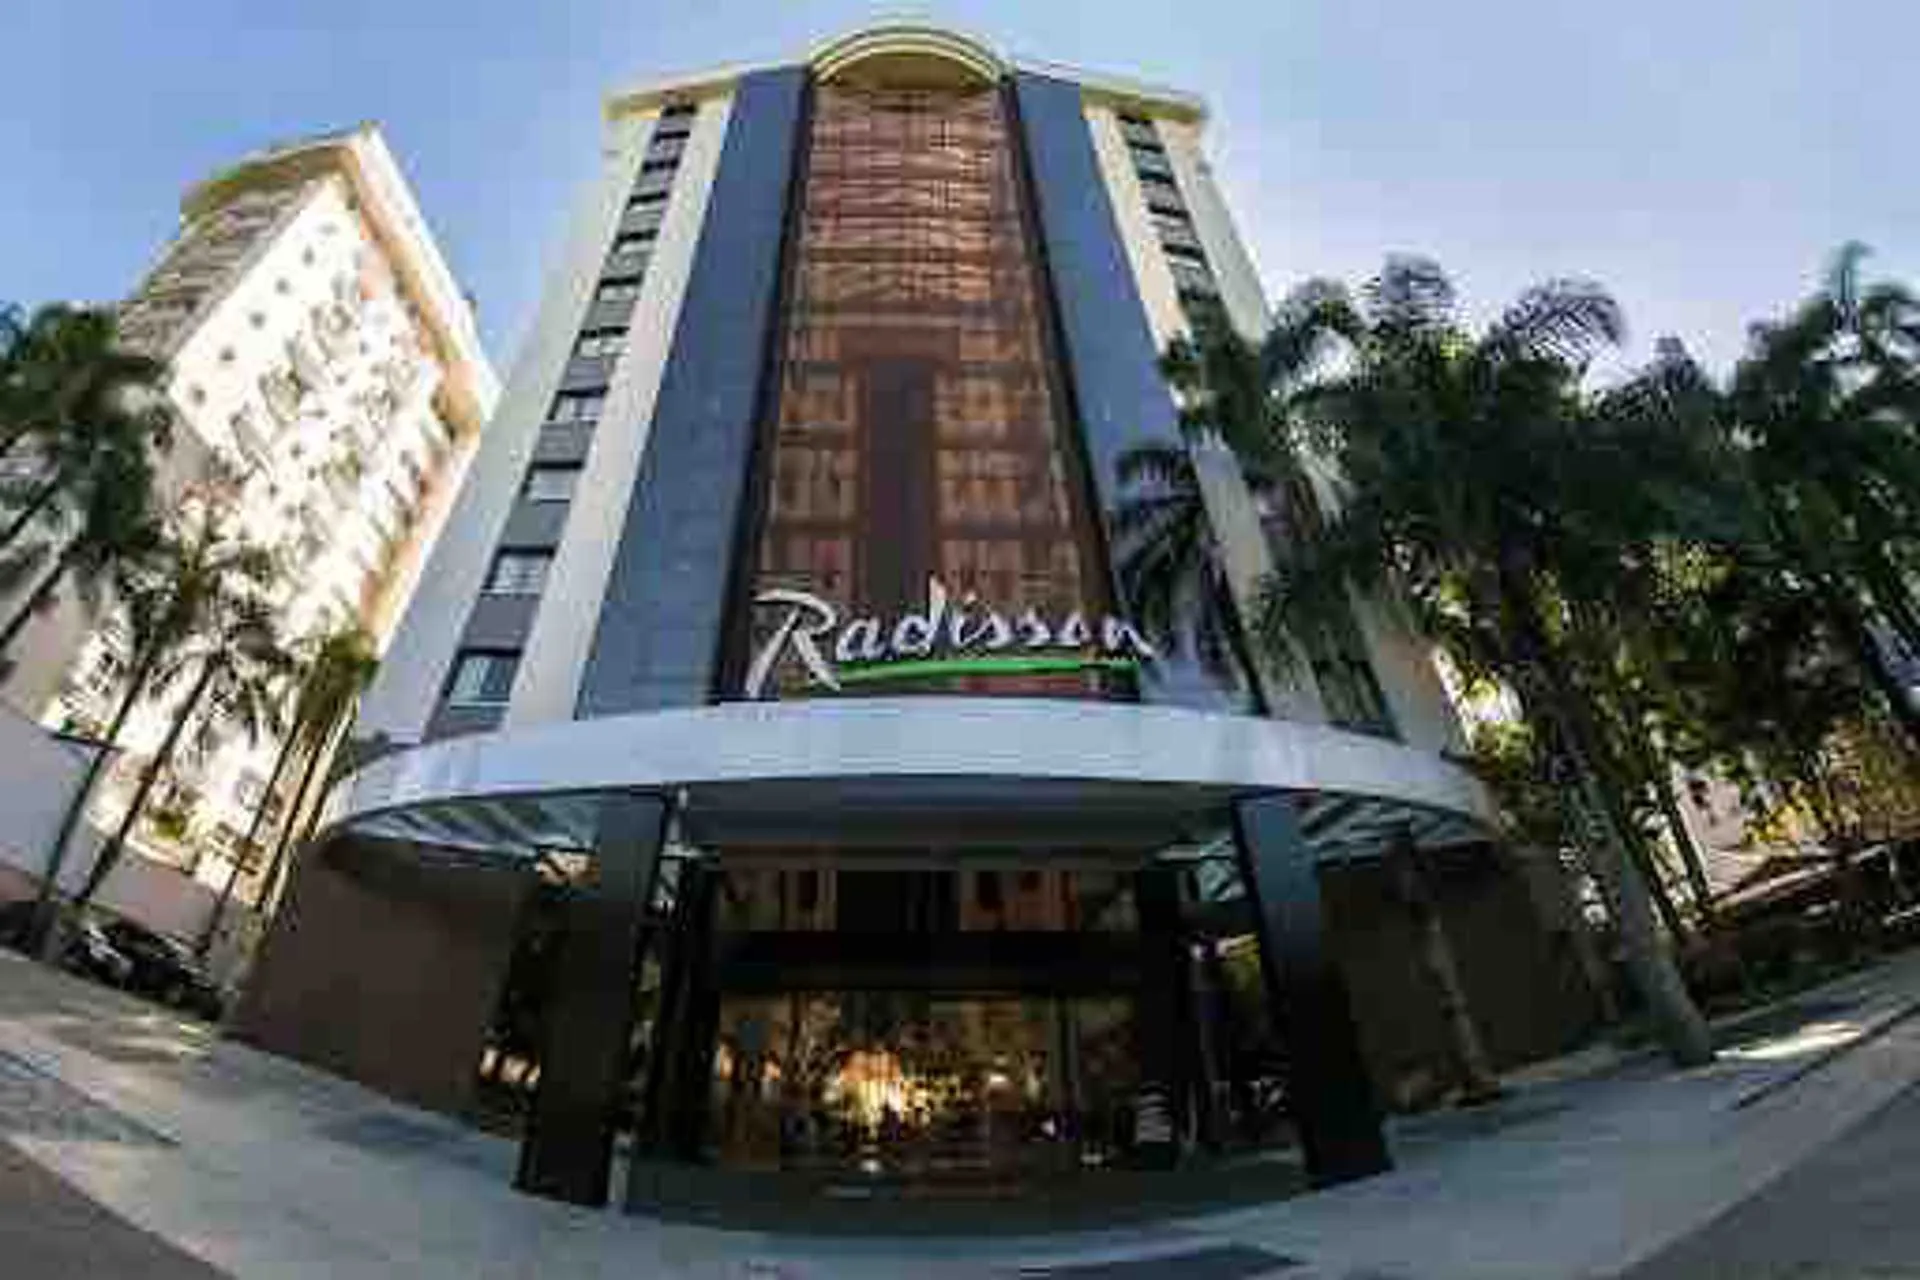 Radisson Hotels busca invertir y abrir hoteles en la Argentina 